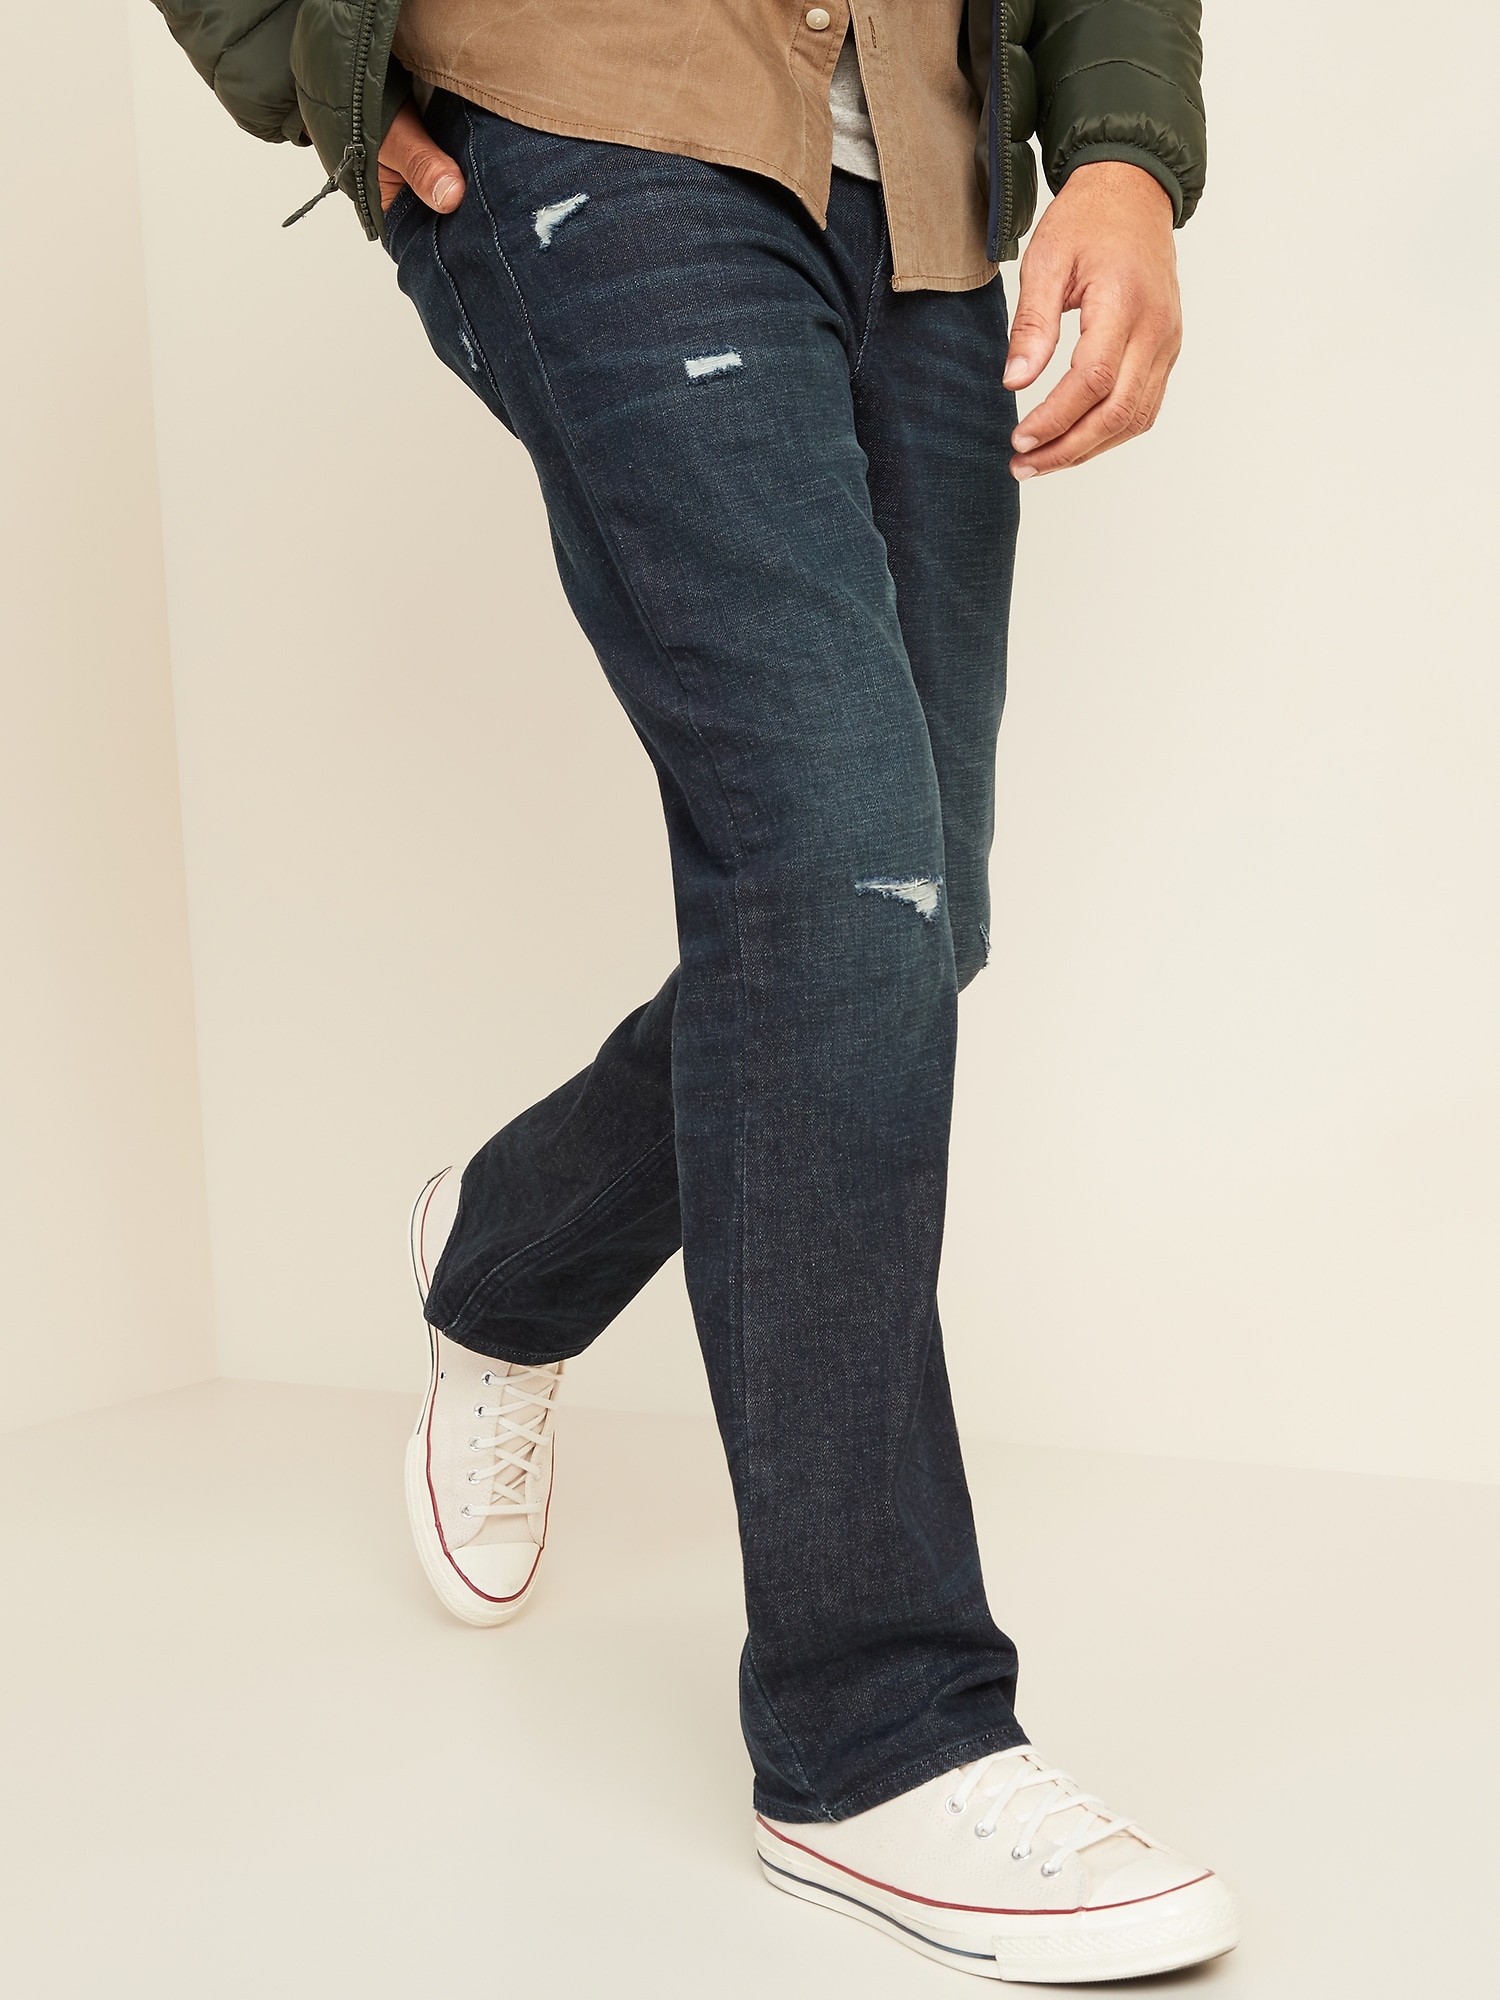 faded jeans mens dark boot cut